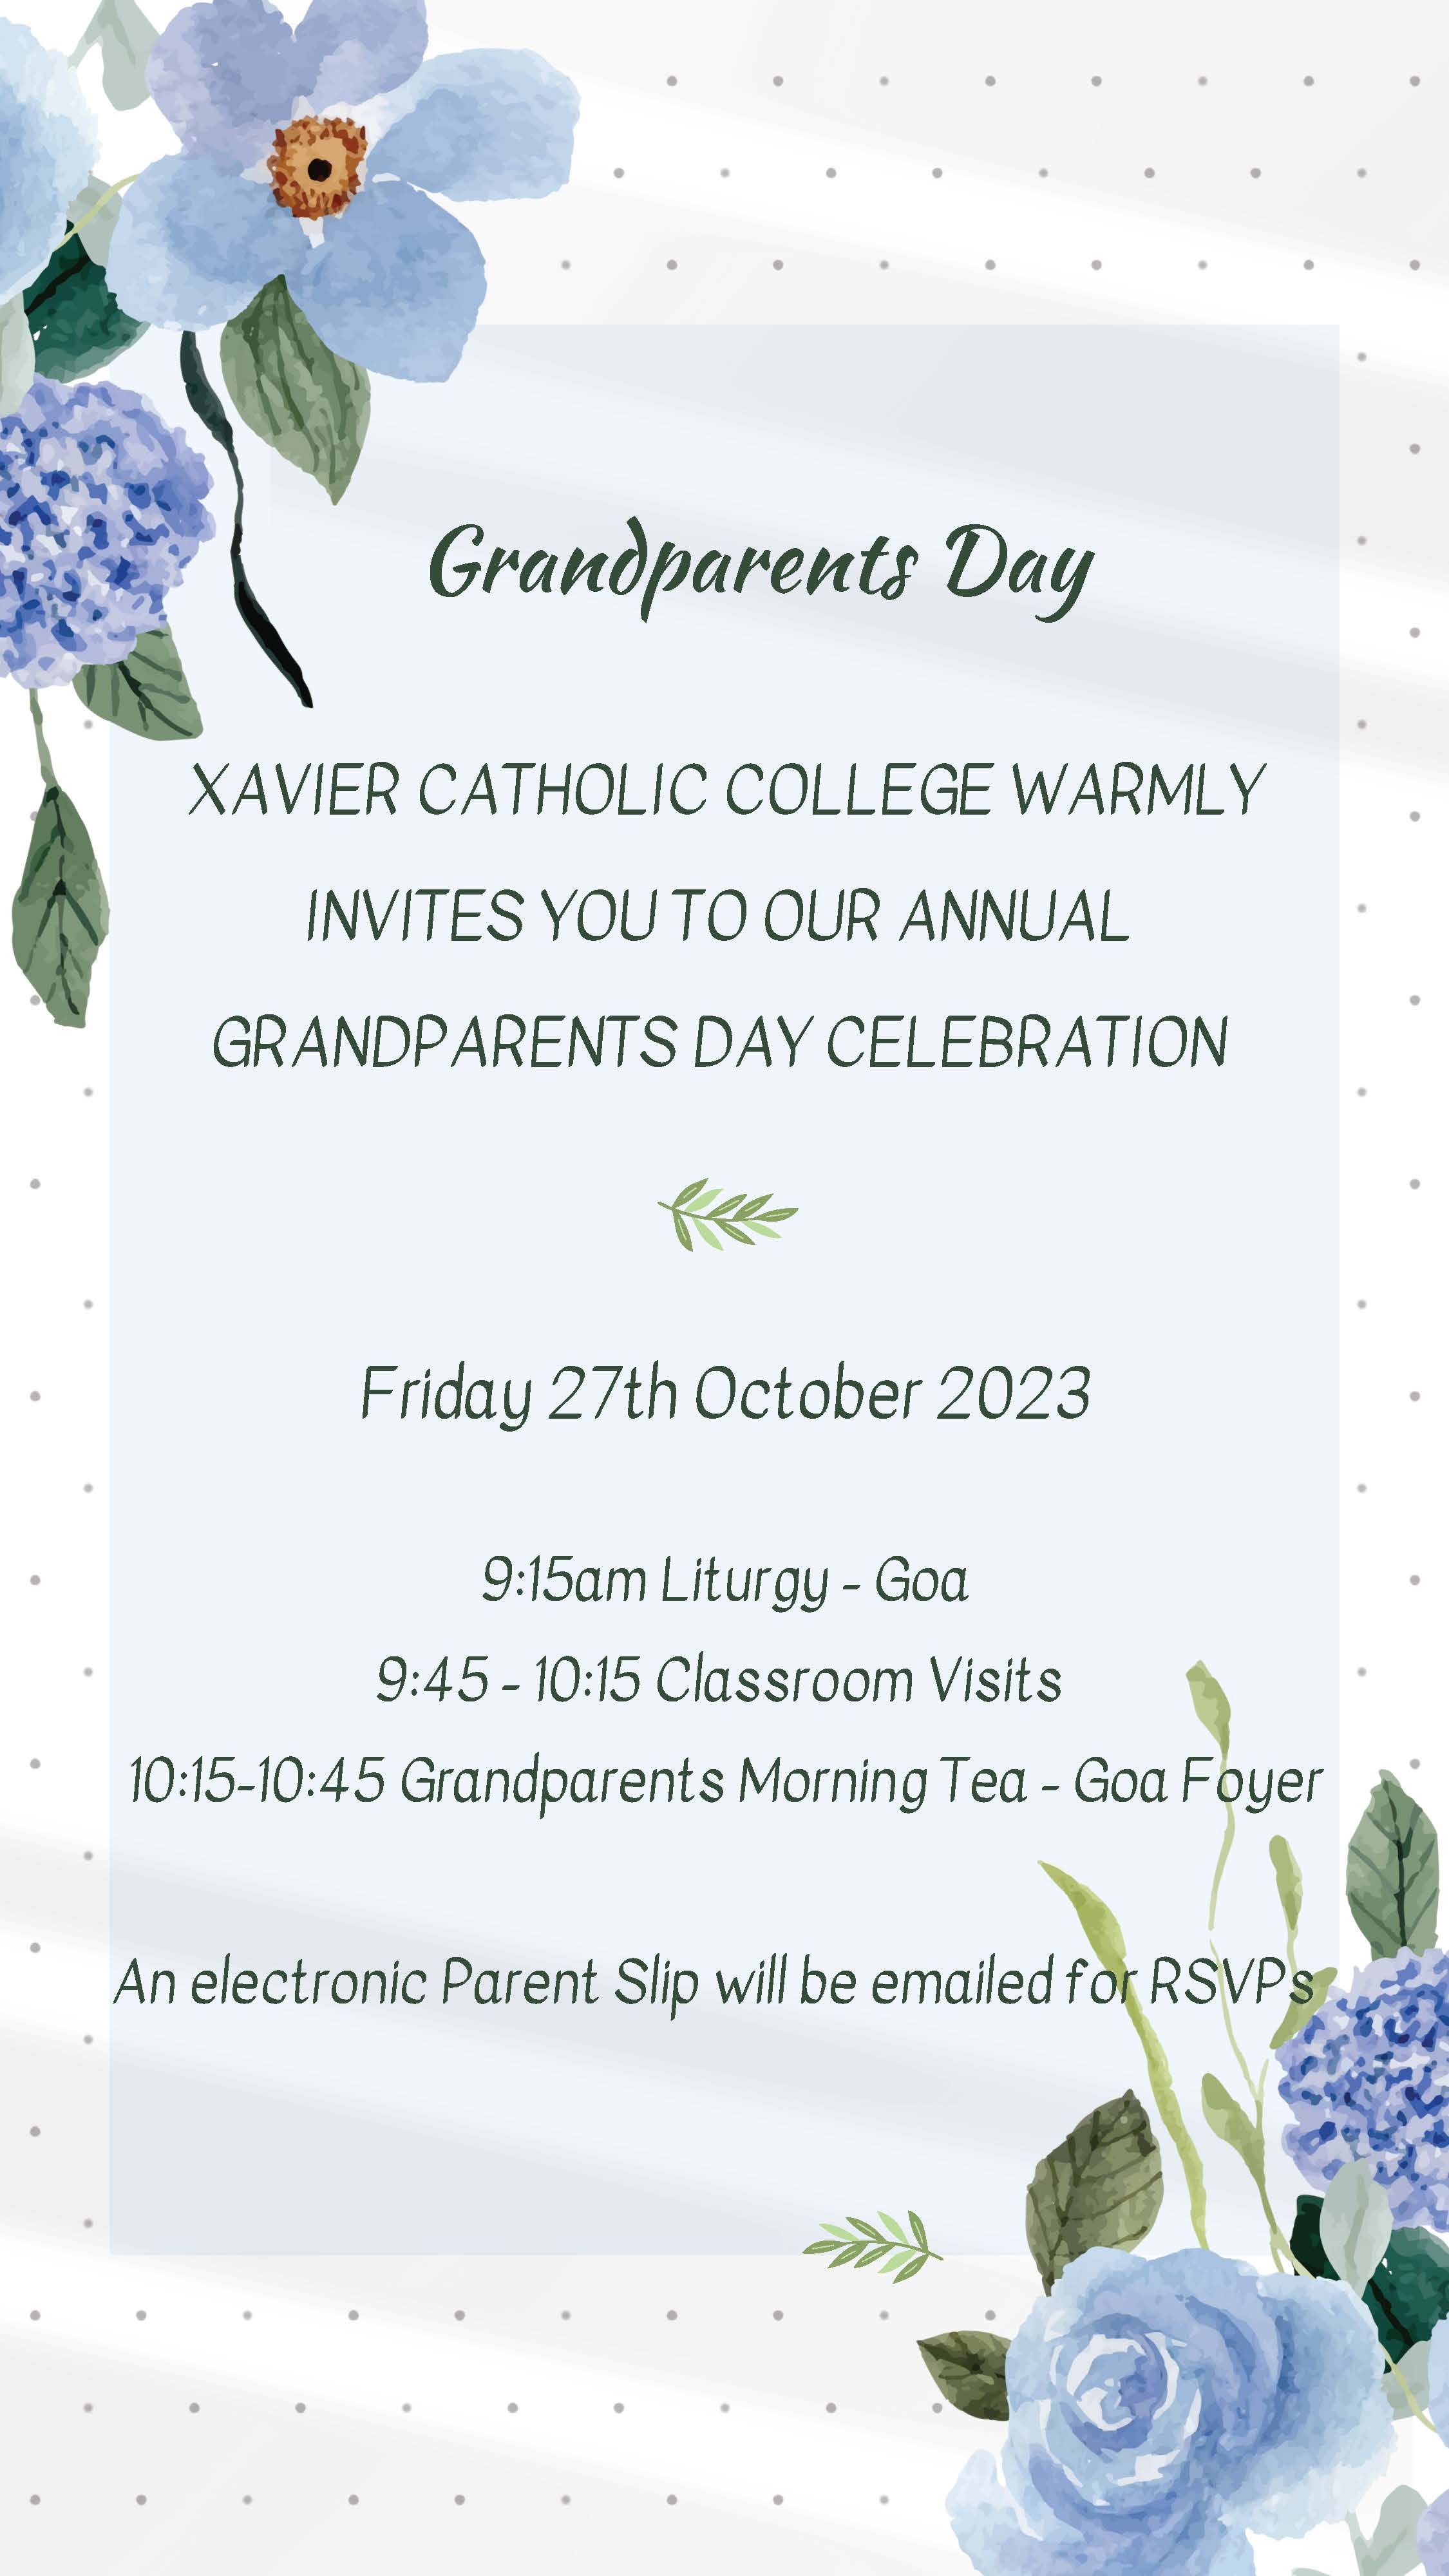 Grandparents Day Invitation 2023.jpg